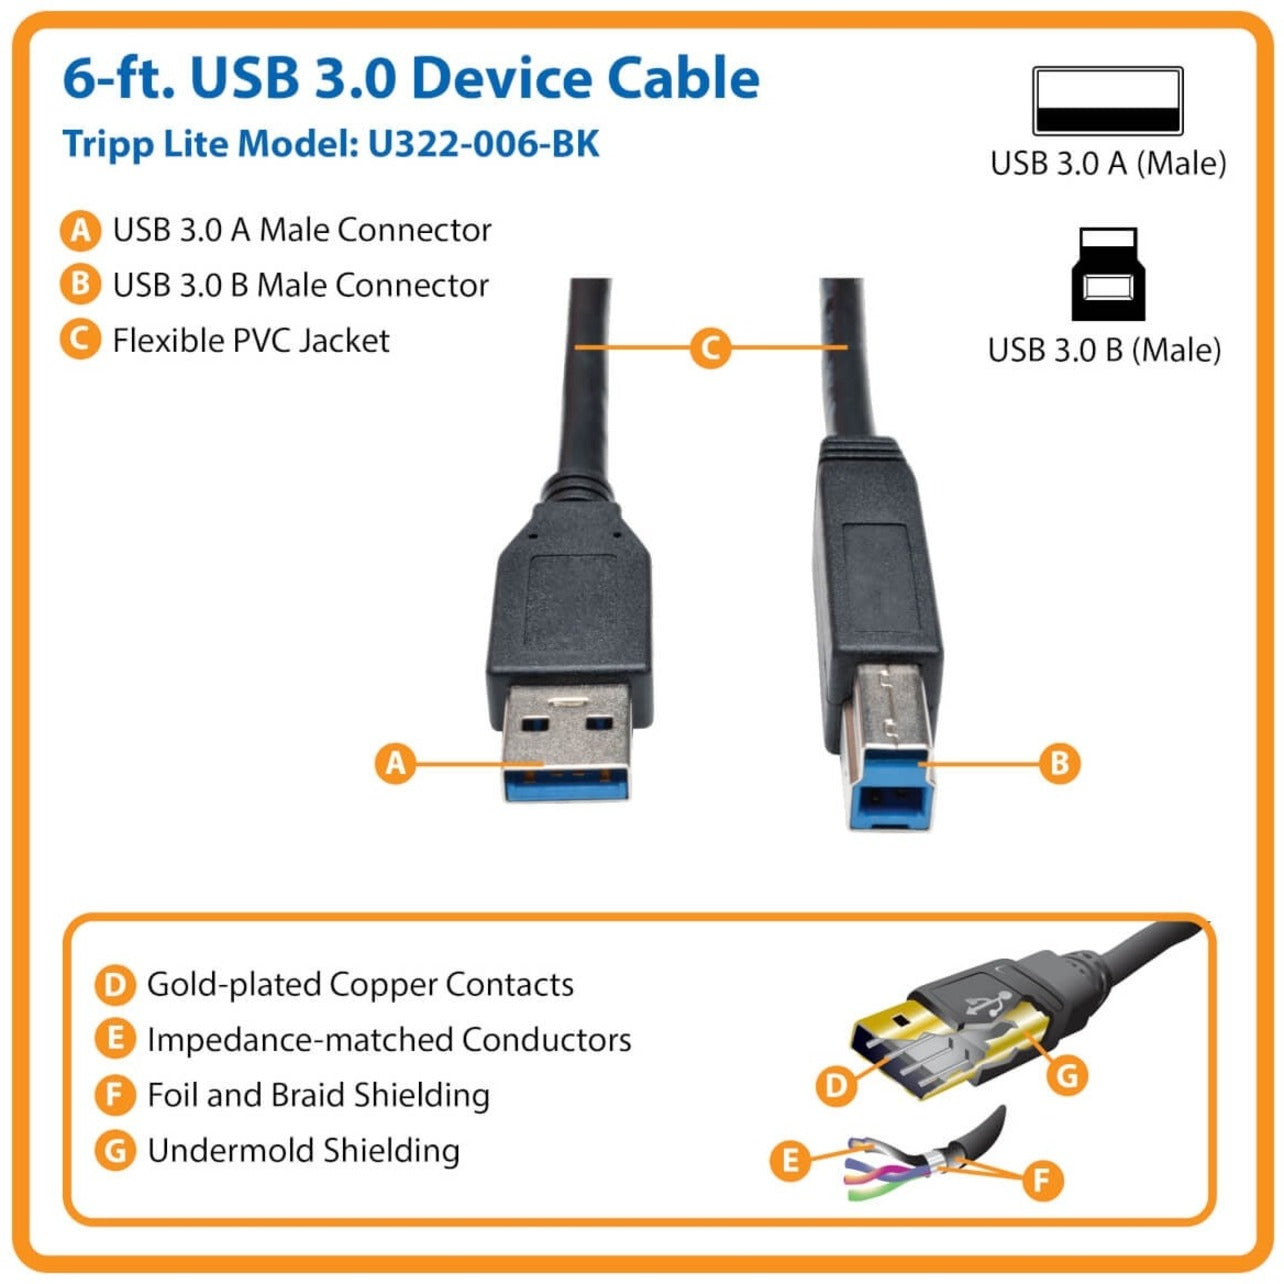 Tripp Lite U322-006-BK USB 3.0 SuperSpeed Device Cable (AB M/M), 6-ft, Black